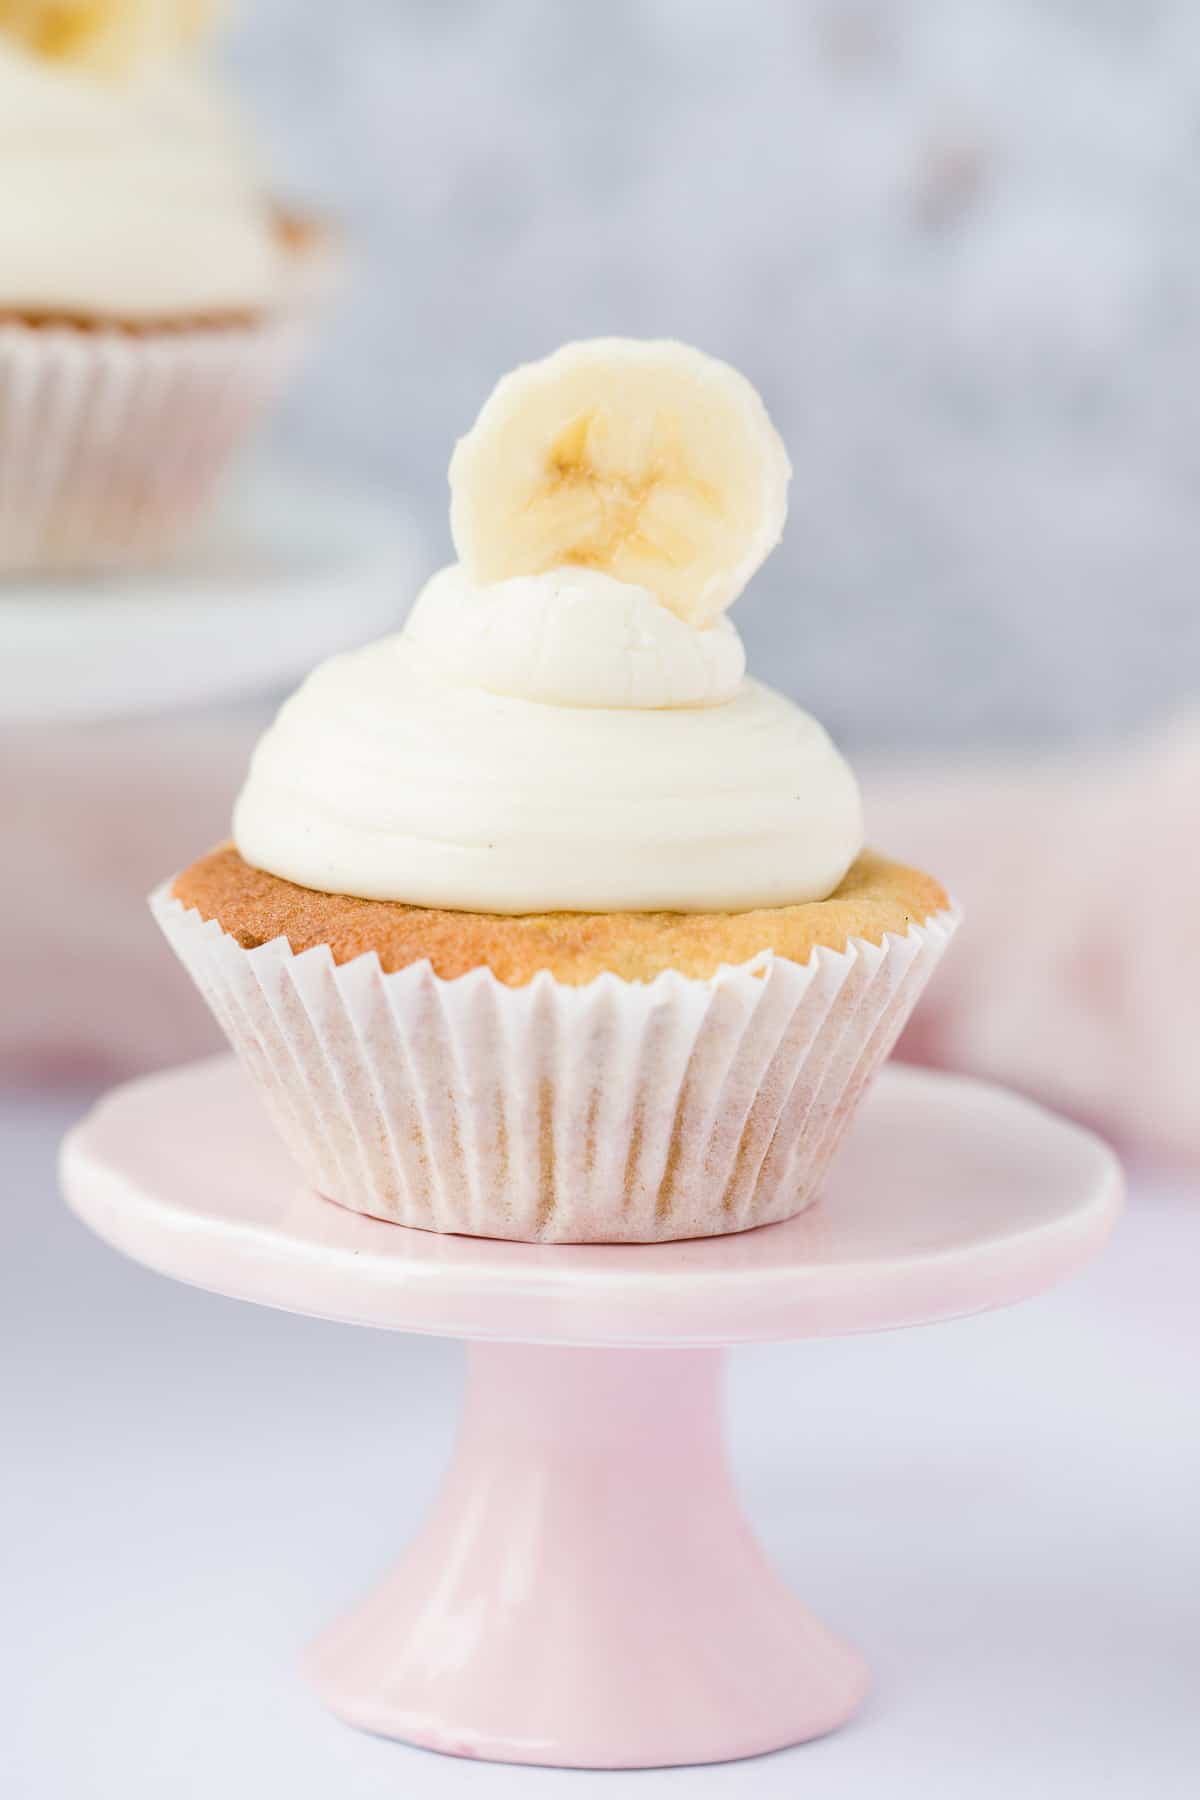 one banana cupcake on a small pink cake stand. 